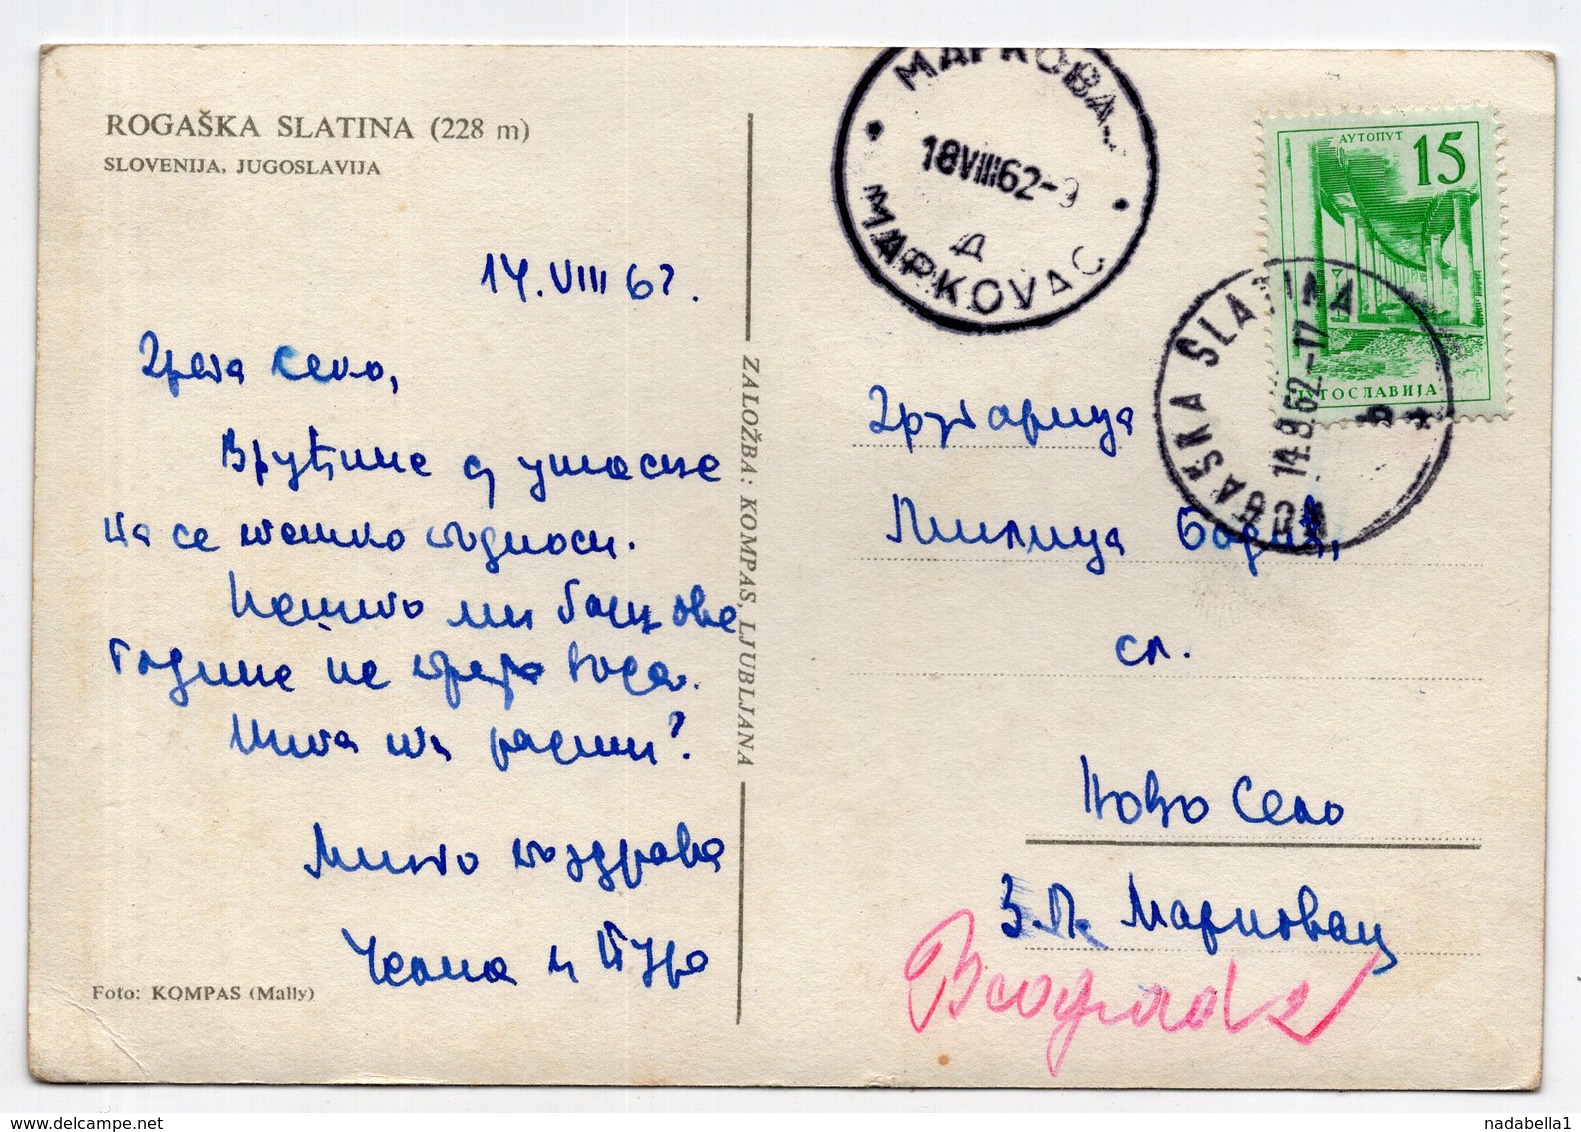 1962 YUGOSLAVIA, SLOVENIA, ROGASKA SLATINA TO NOVI SAD, ILLUSTRATED POSTCARD, USED - Yugoslavia